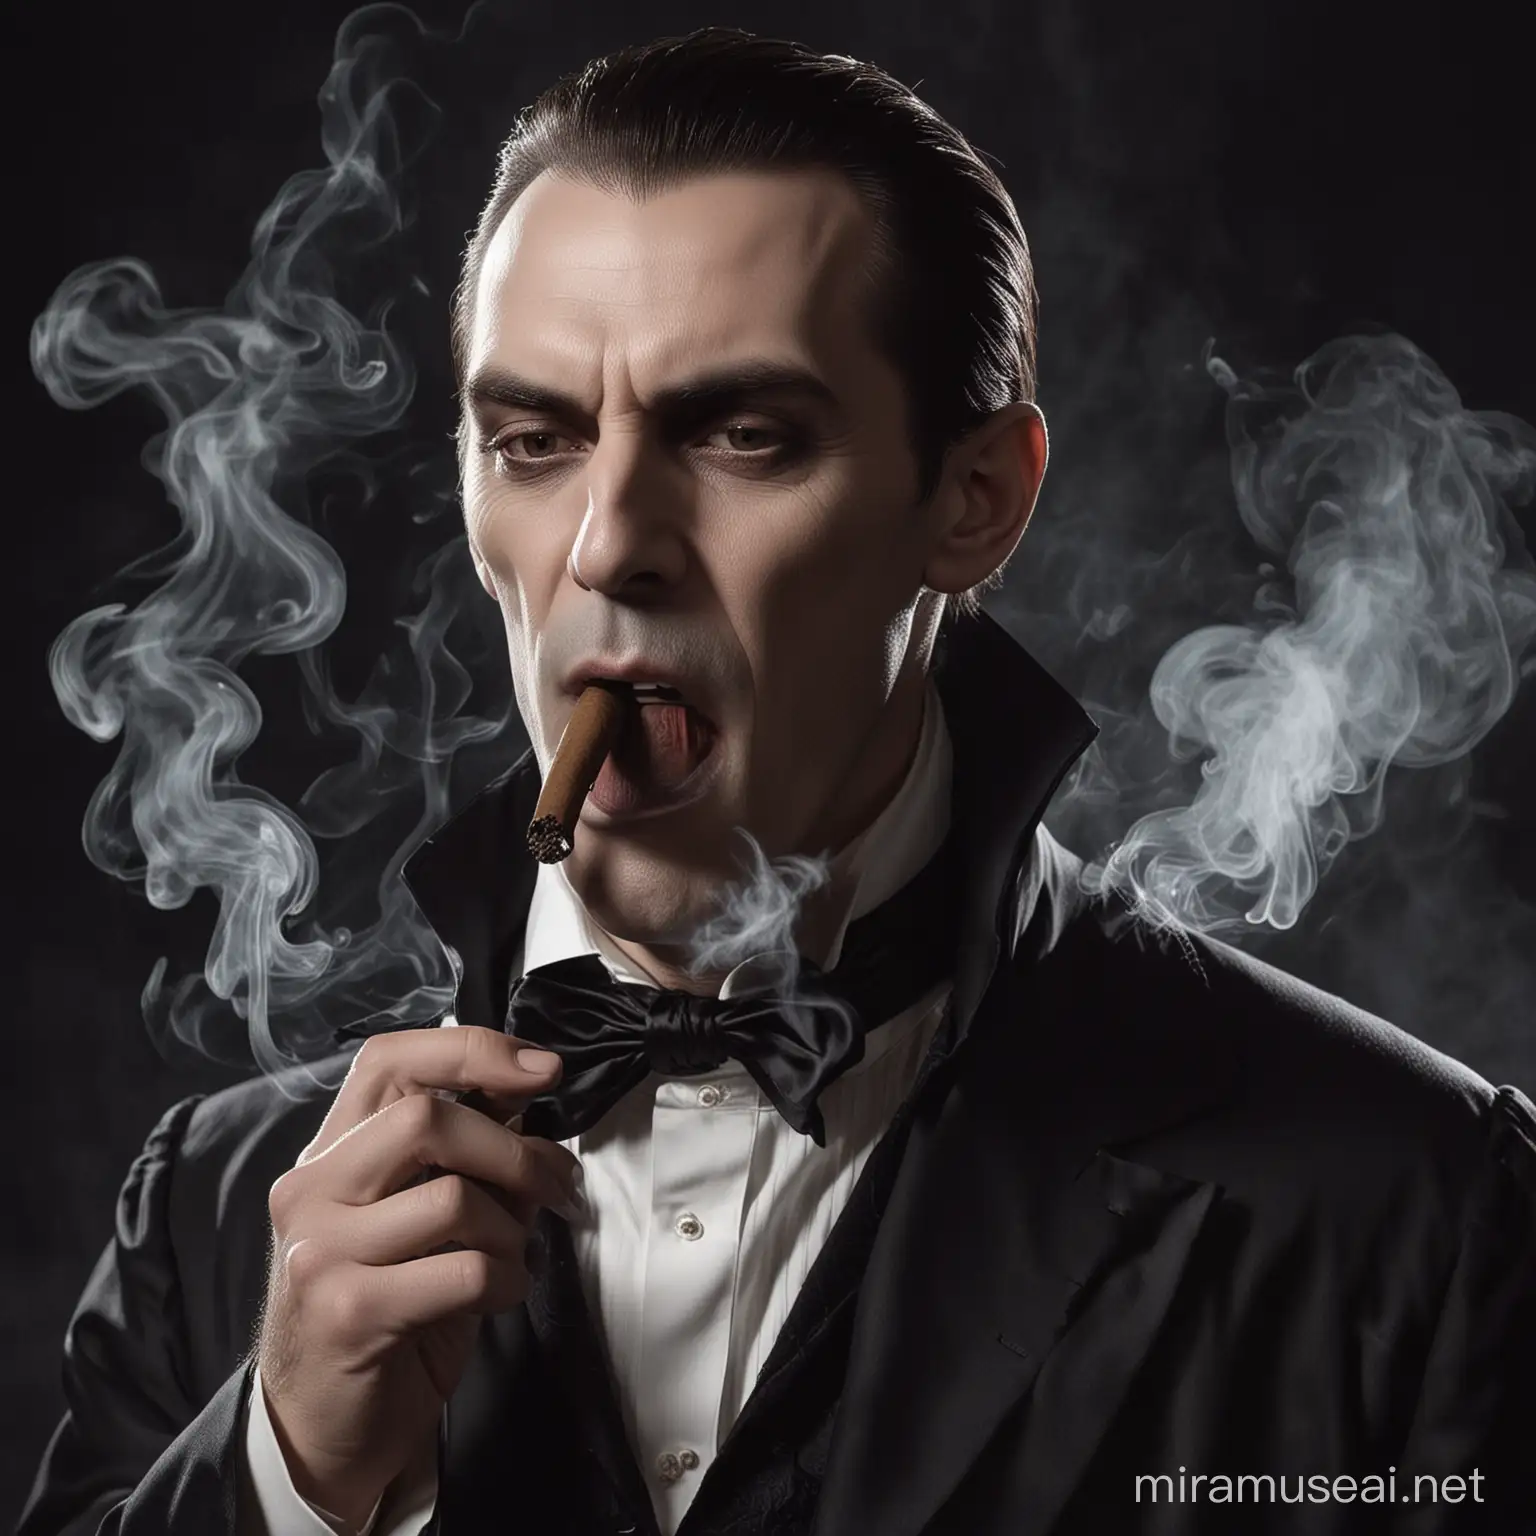 Sophisticated Vampire Smoking a Cigar